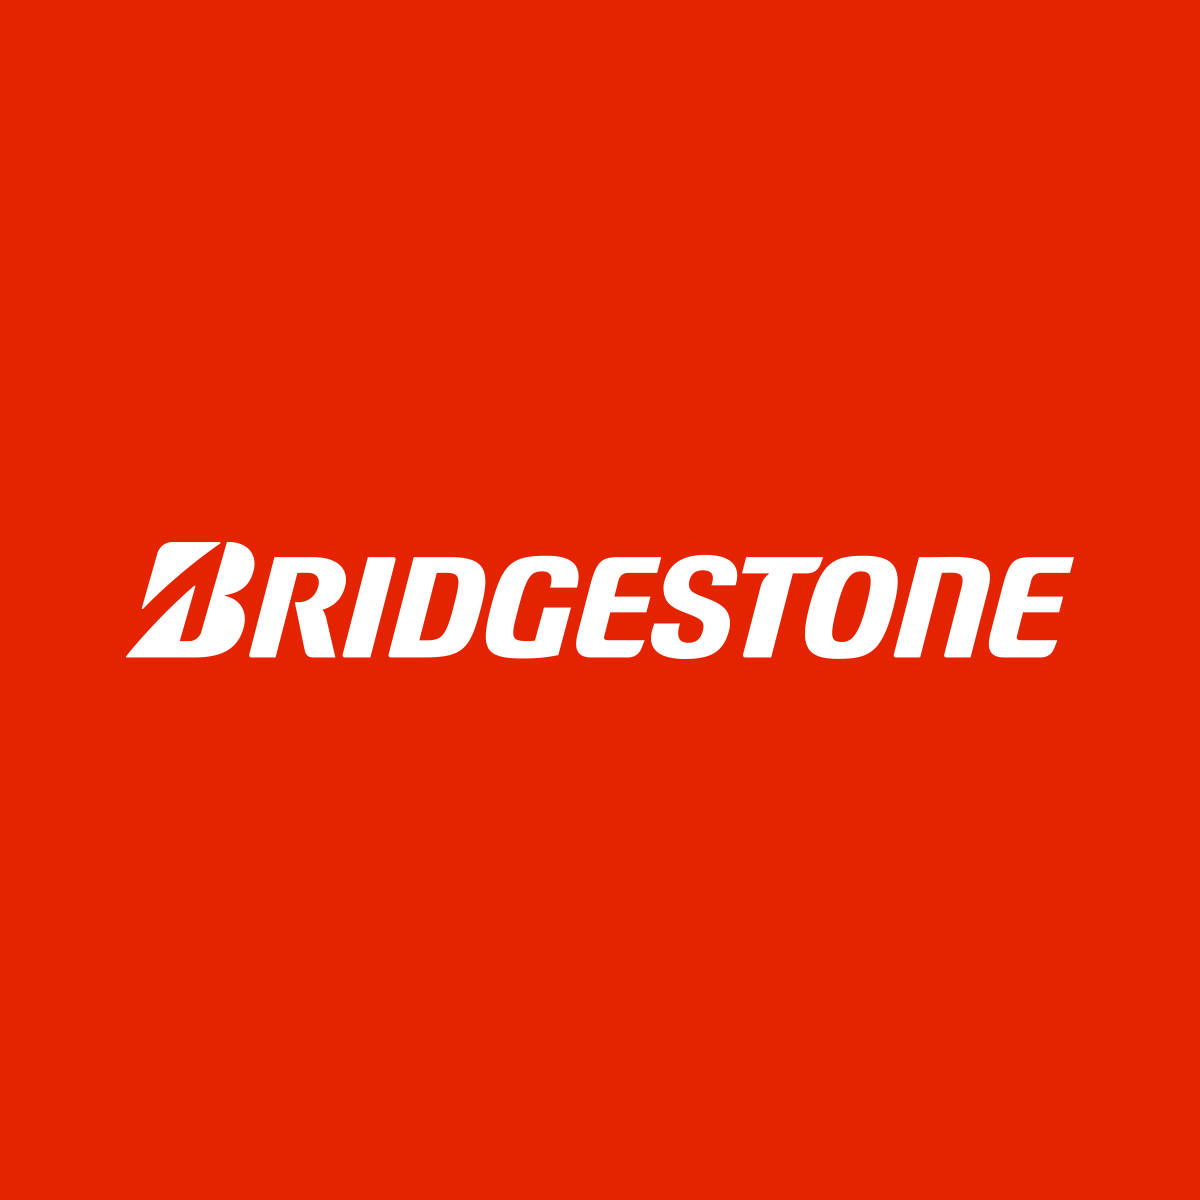 Rotesbridgestone-logo (the Translation Is The Same As The Original) Wallpaper